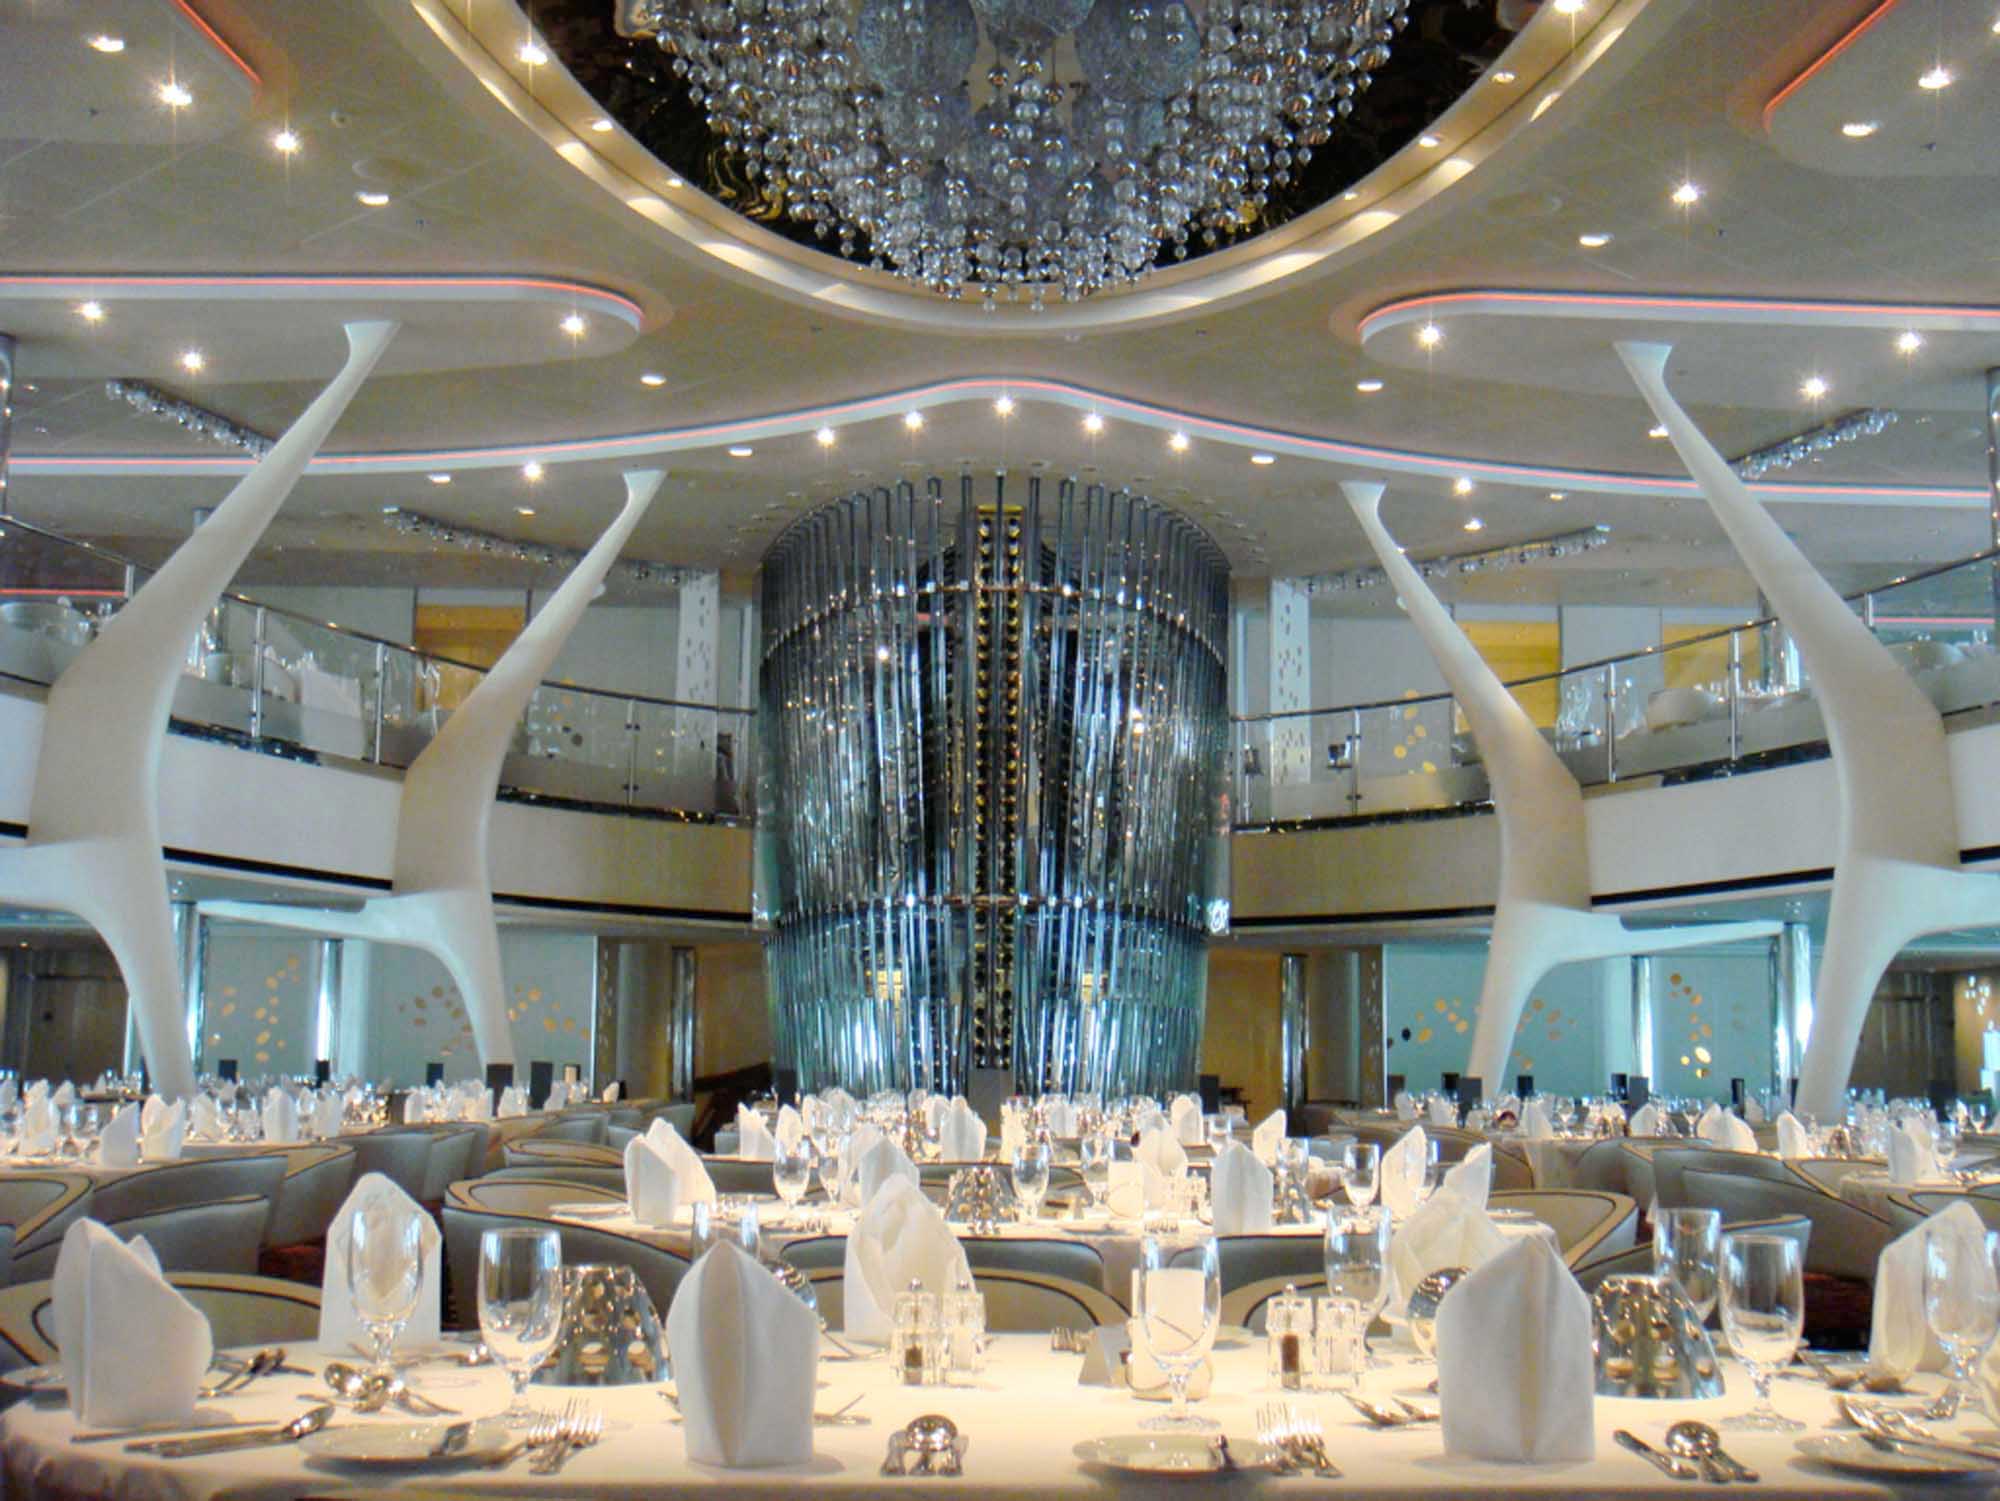 cruise ship dining room attire